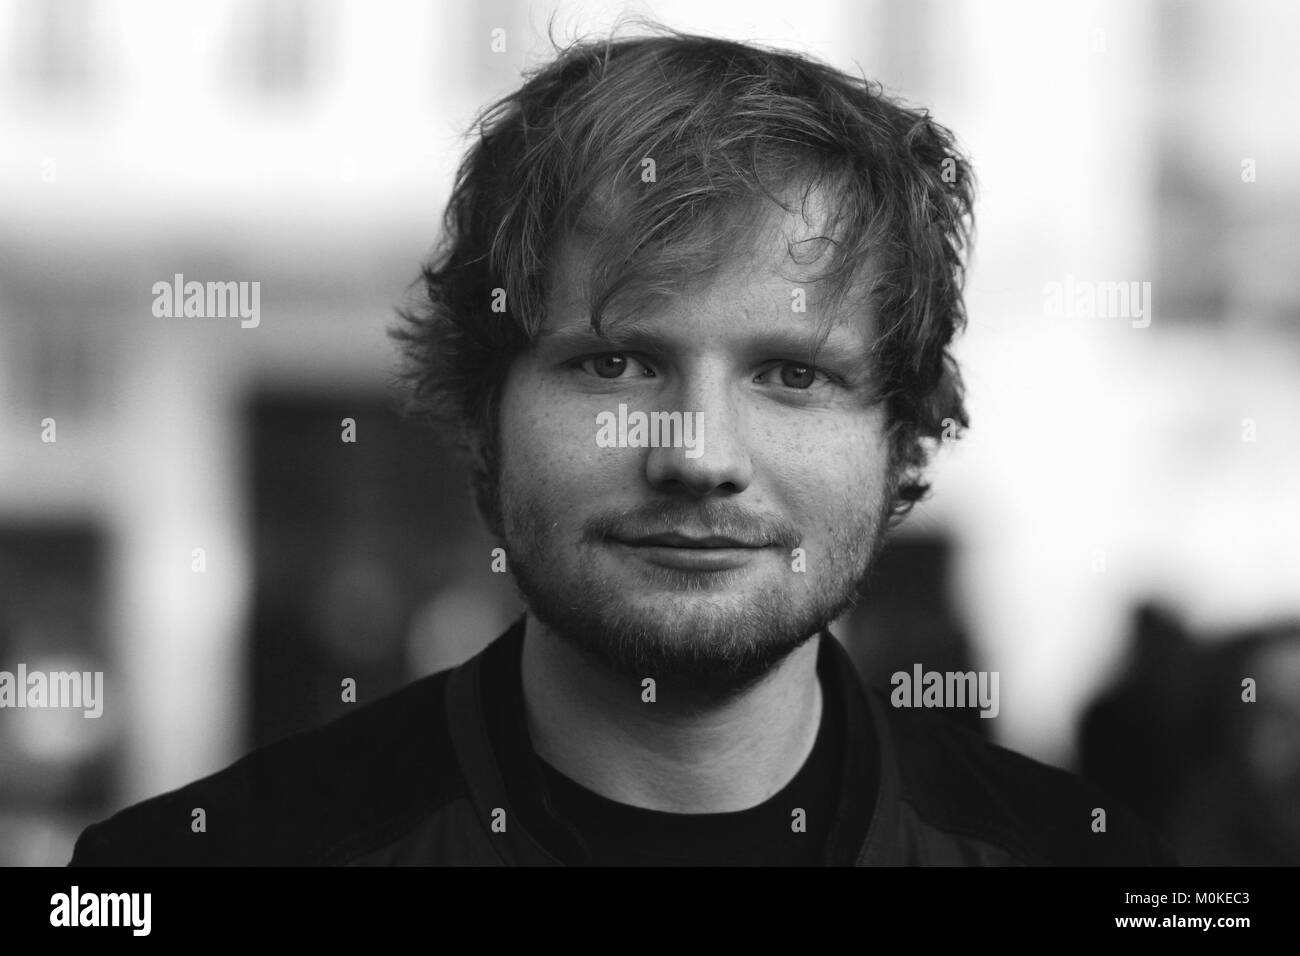 London, UK, 30. September 2014: Ed Sheeran gesehenes Verlassen BBC Studios in London (Bild digital geändert werden Schwarzweiß) Stockfoto